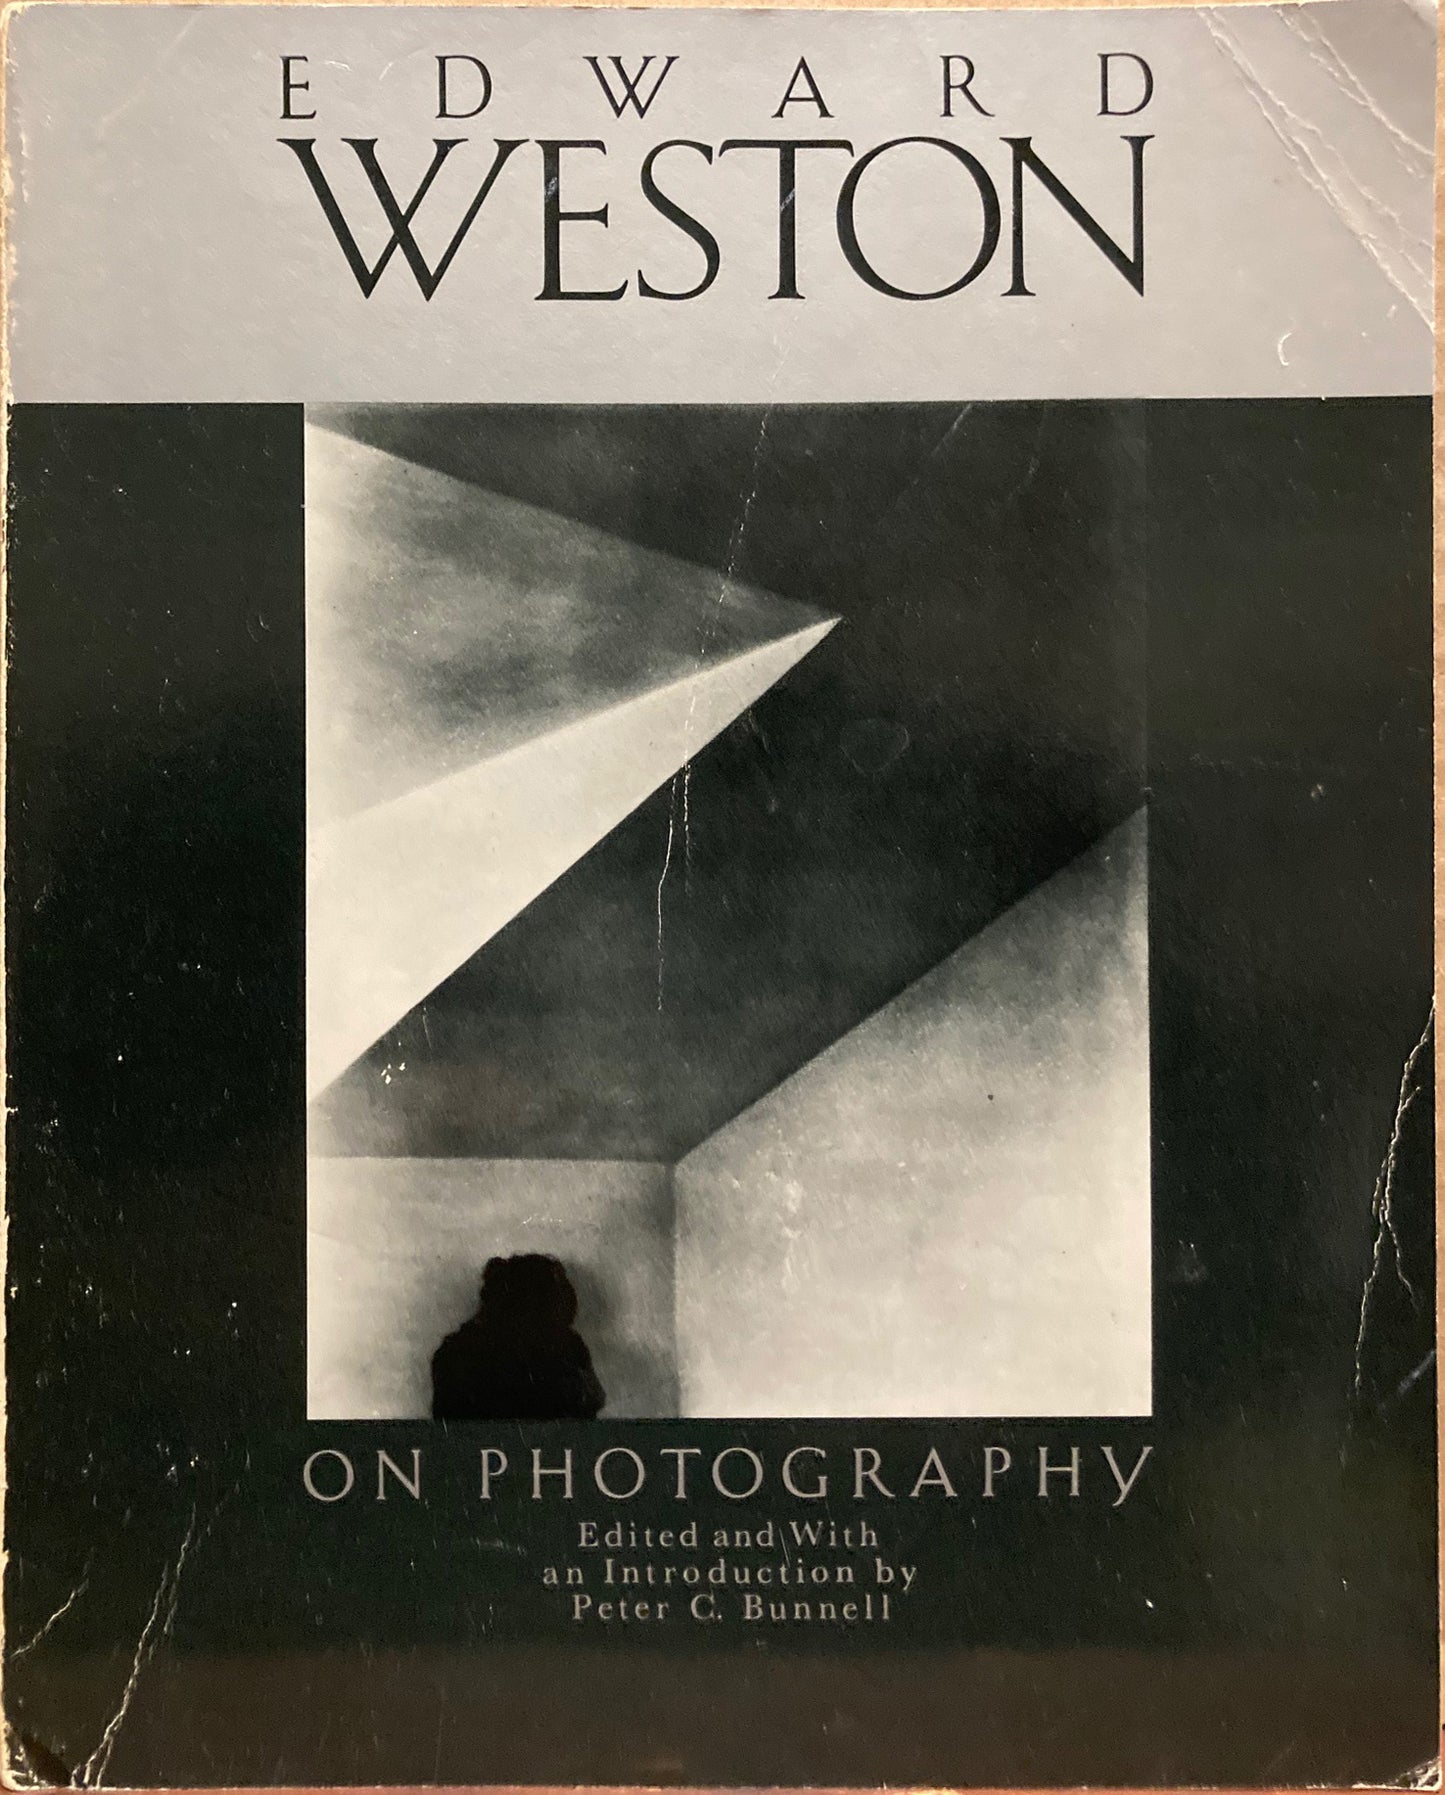 Weston, Edward. Edward Weston on Photography, edited by Peter C. Bunnell.